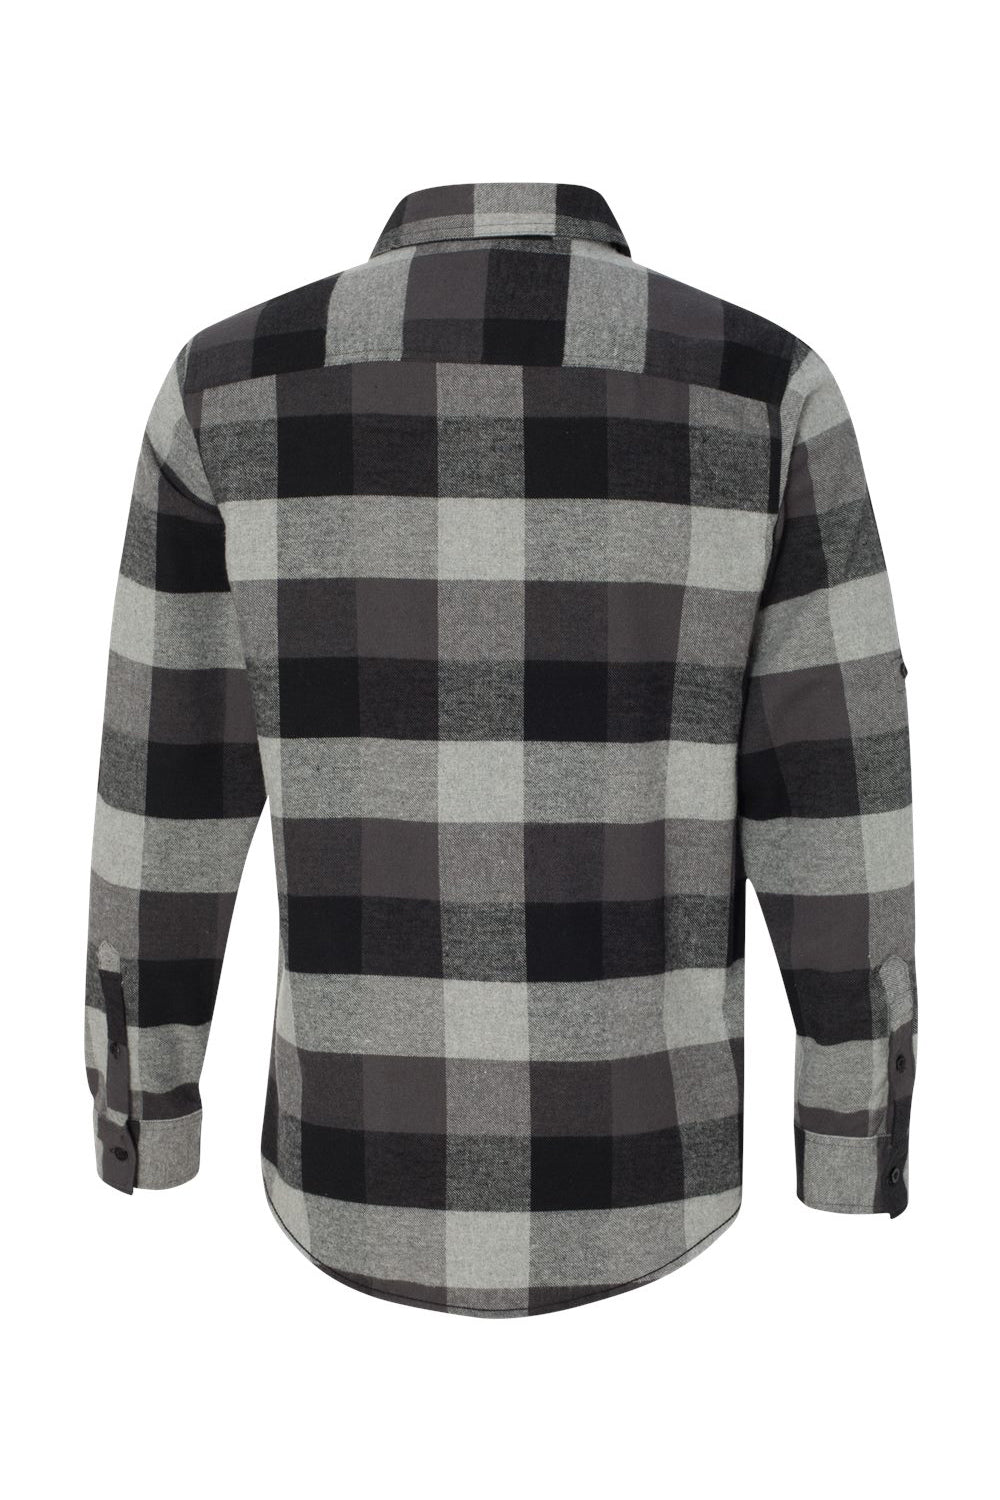 Burnside B8210/8210 Mens Flannel Long Sleeve Button Down Shirt w/ Double Pockets Black/Grey Flat Back